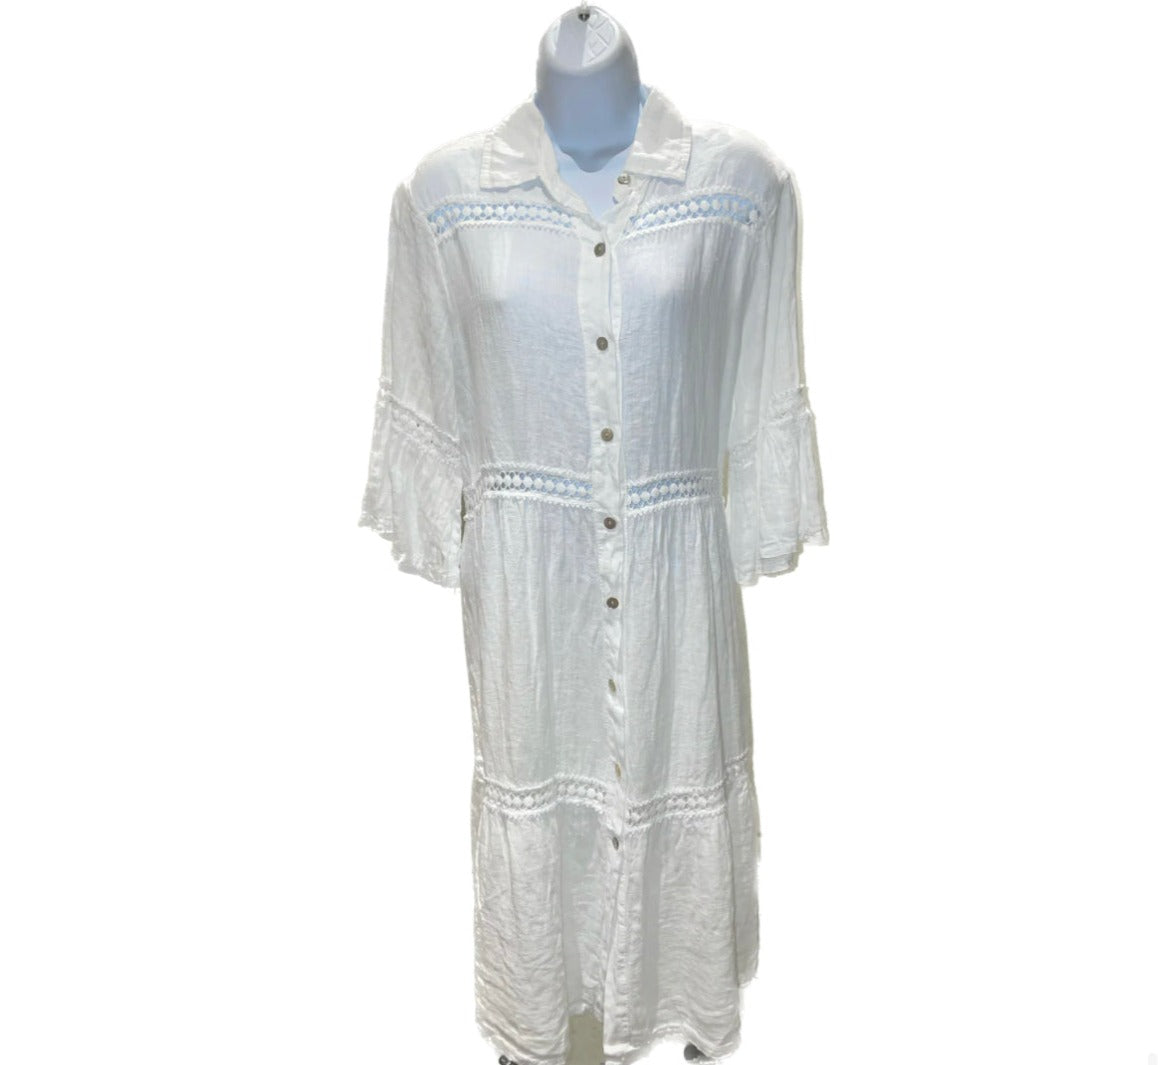 MINI L/S Linen Dress w Crochet Details - White